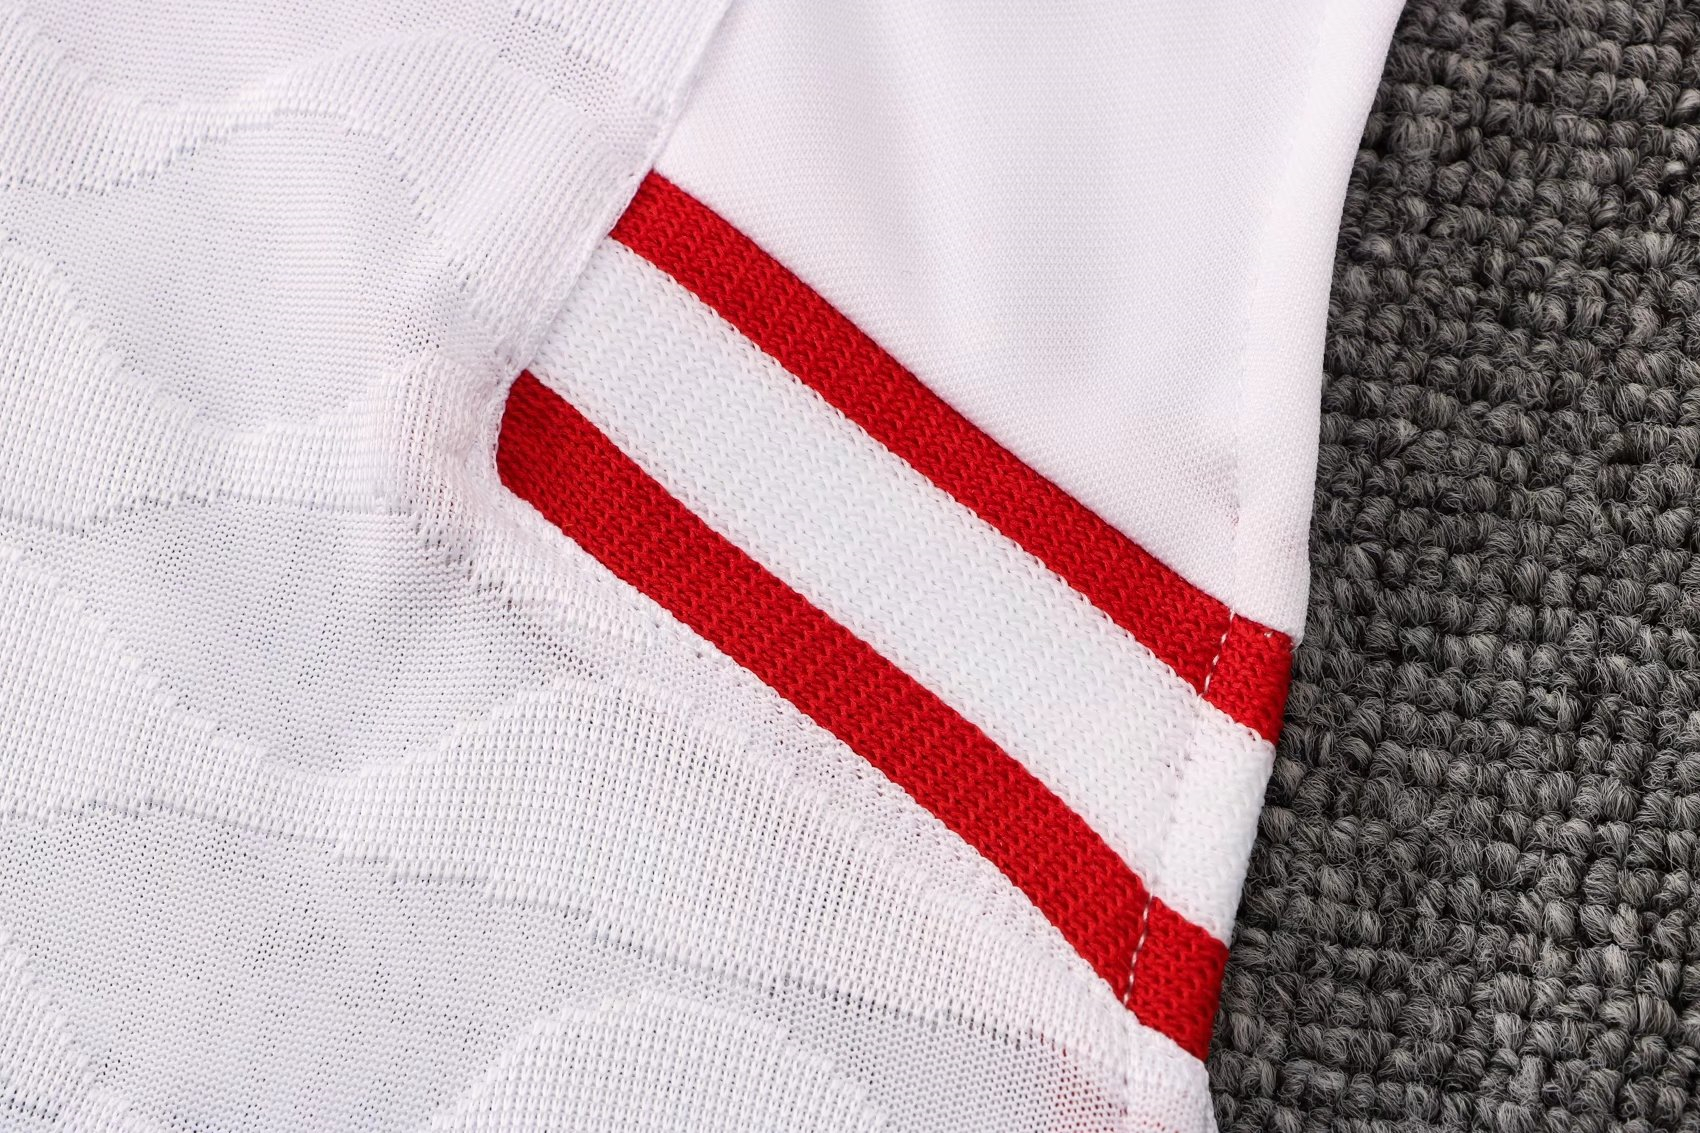 PSG x Jordan Soccer Singlet Jersey Replica White Waves Mens 2021/22